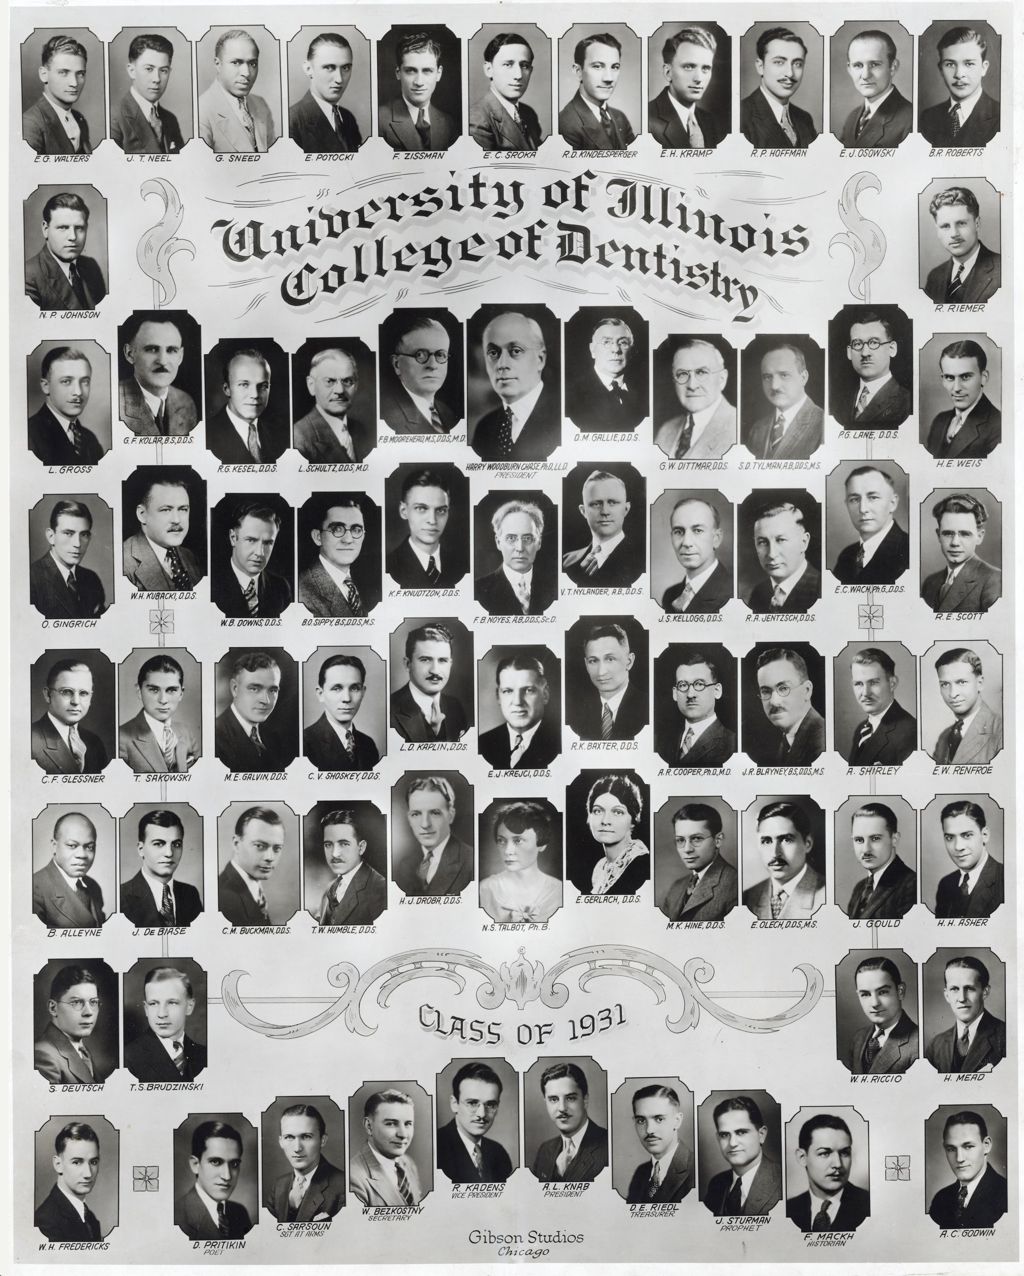 Miniature of 1931 graduating class, University of Illinois College of Dentistry